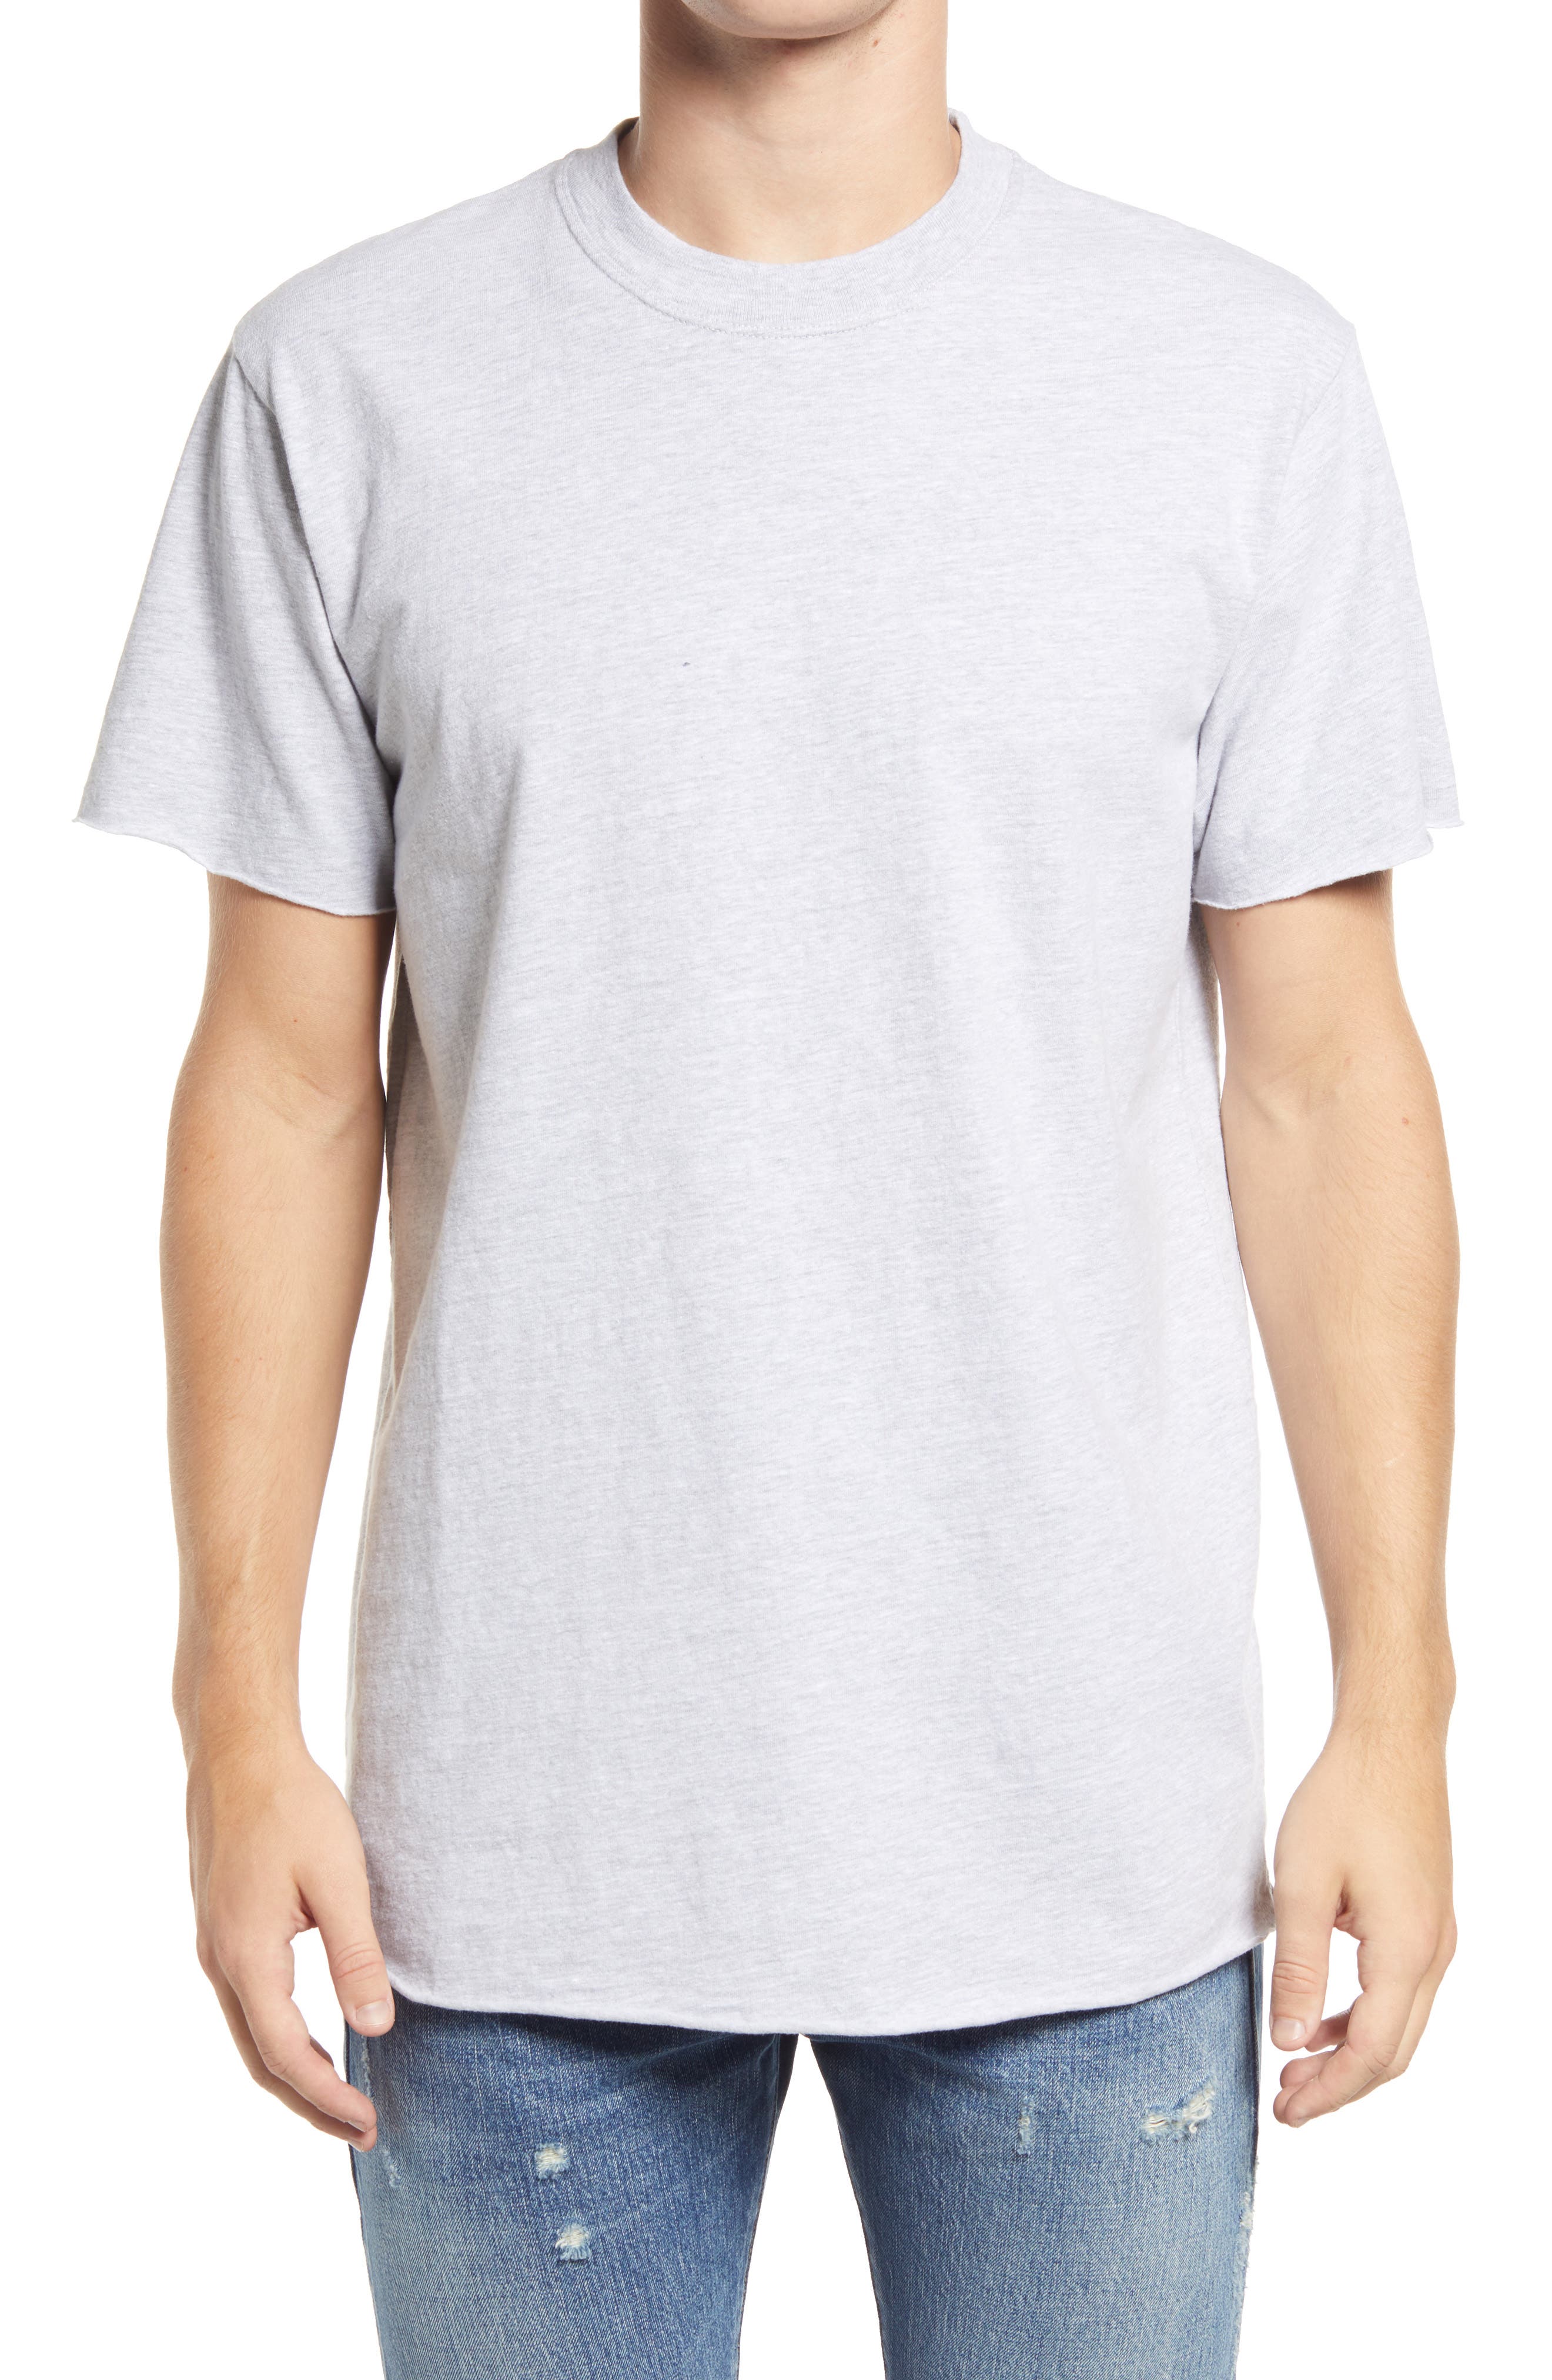 John Elliott Anti Expo Crewneck T-Shirt in Organic Grey at Nordstrom, Size Small